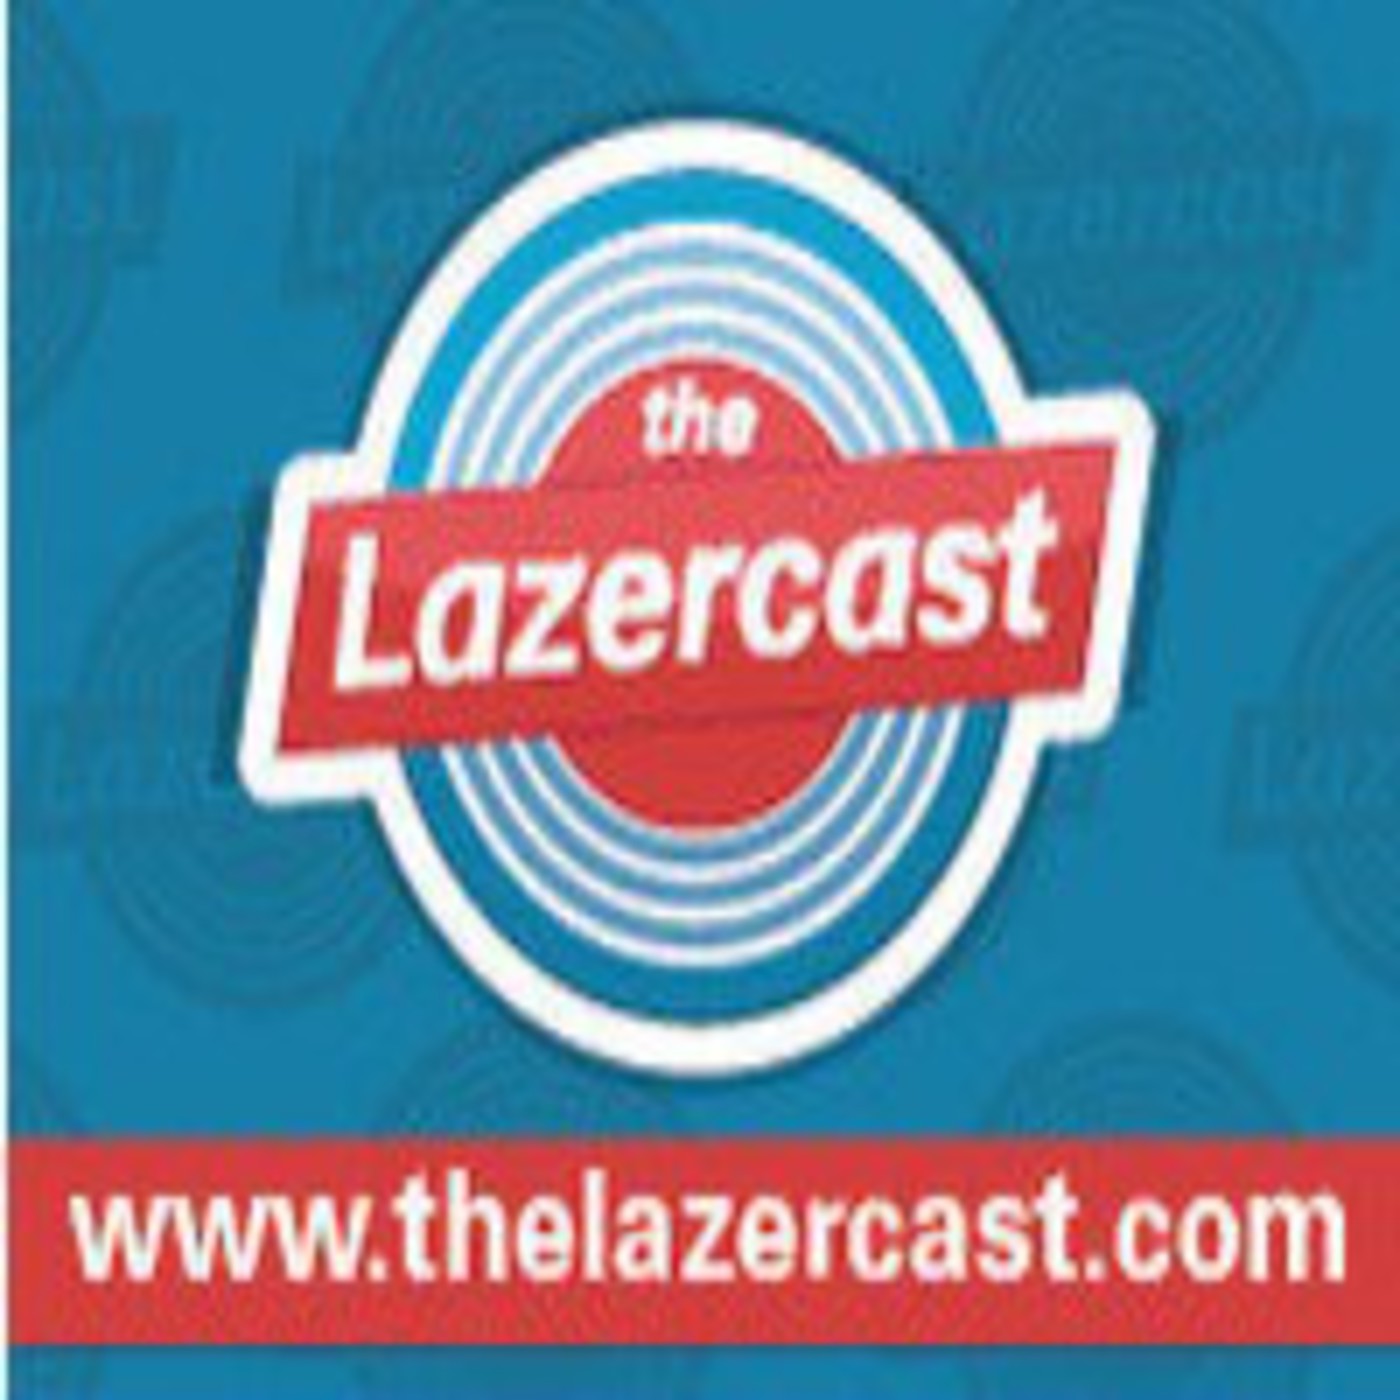 The Lazercast